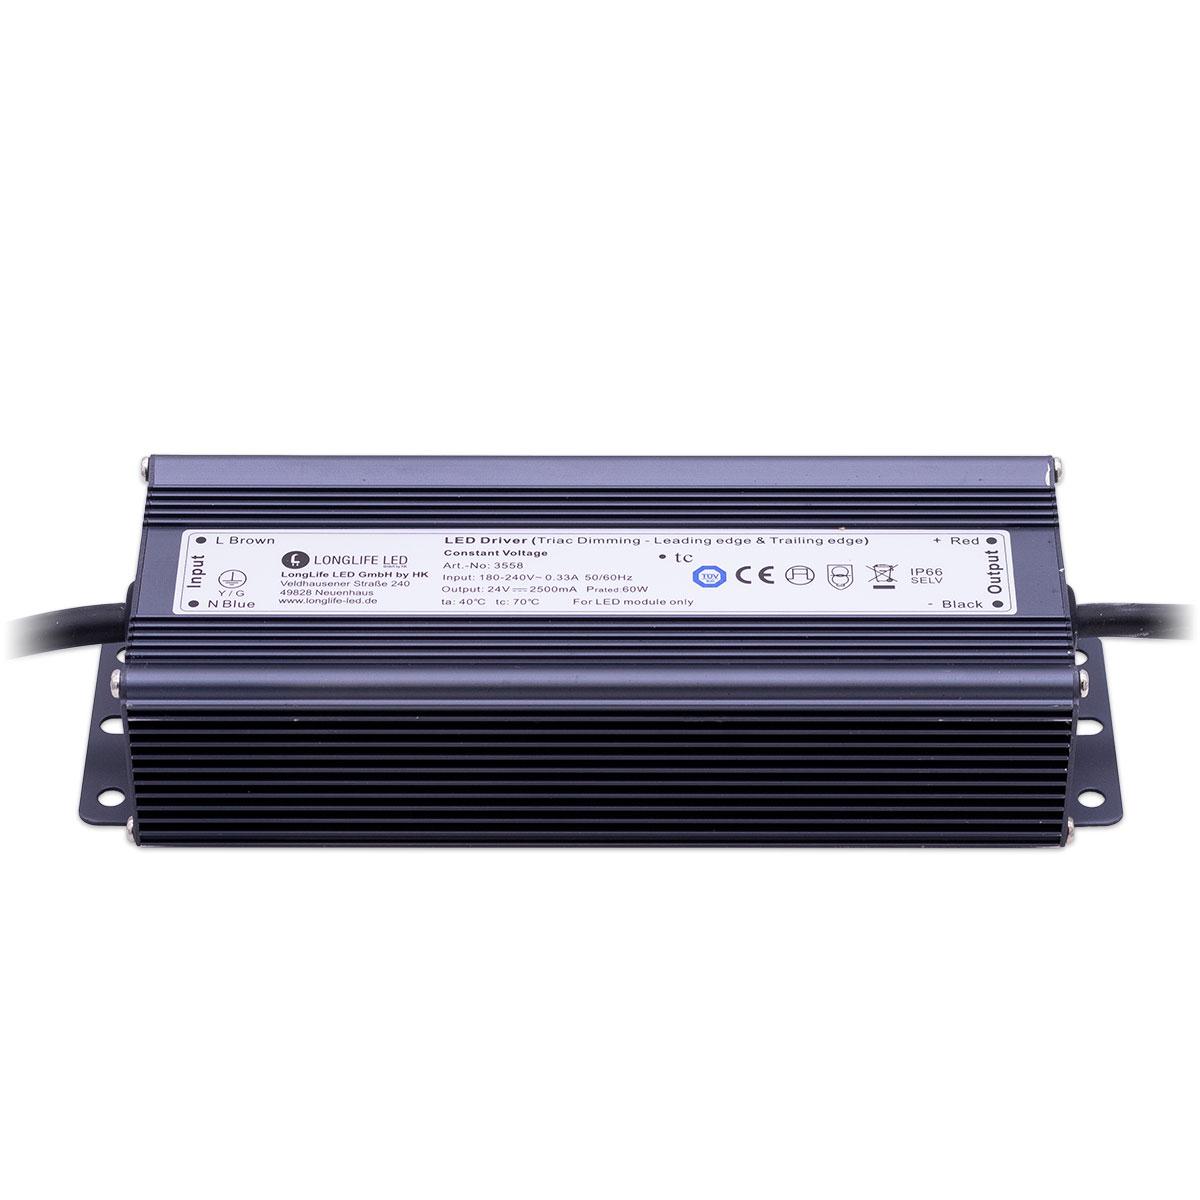 LED Netzteil 60W 24V 2.5A IP66 dimmbar TRIAC LongLife LED KV-24060-TD Schaltnetzteil CV